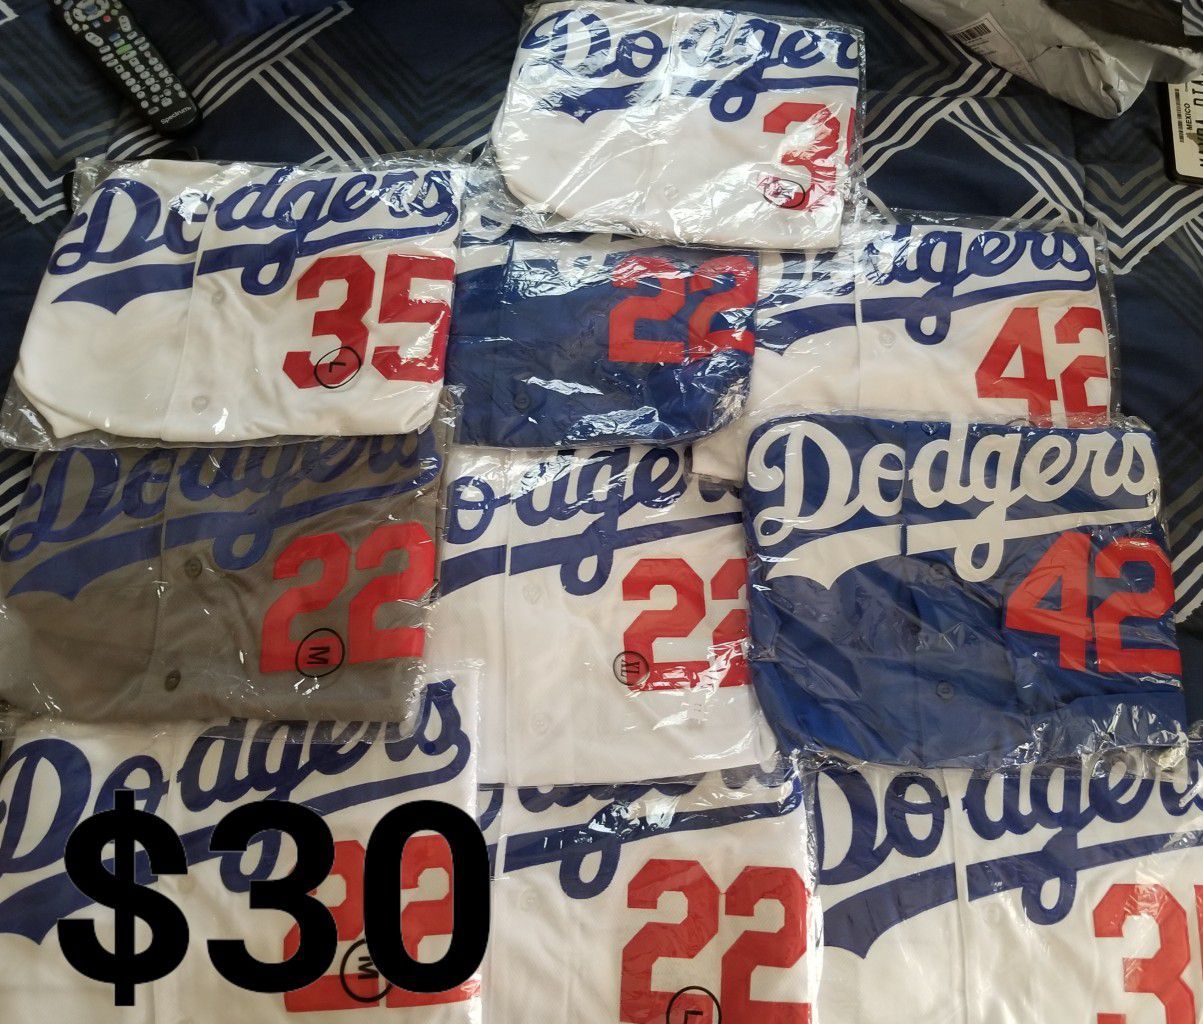 Dodgers clearance sale